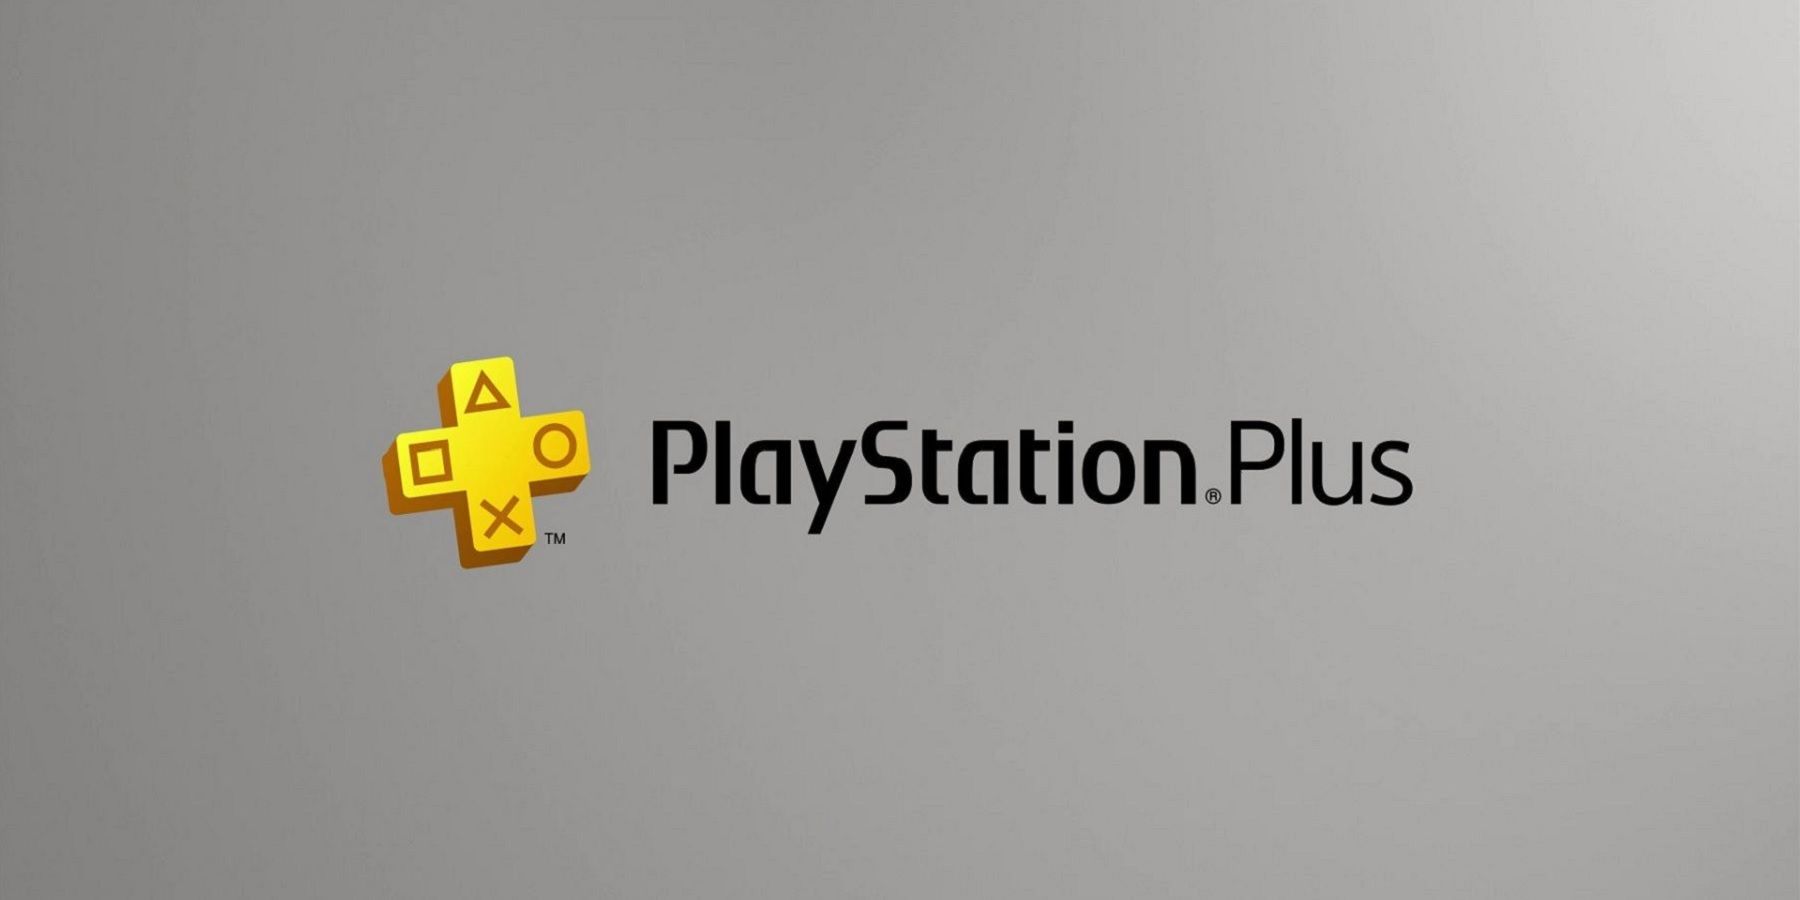 playstation plus logo grey background